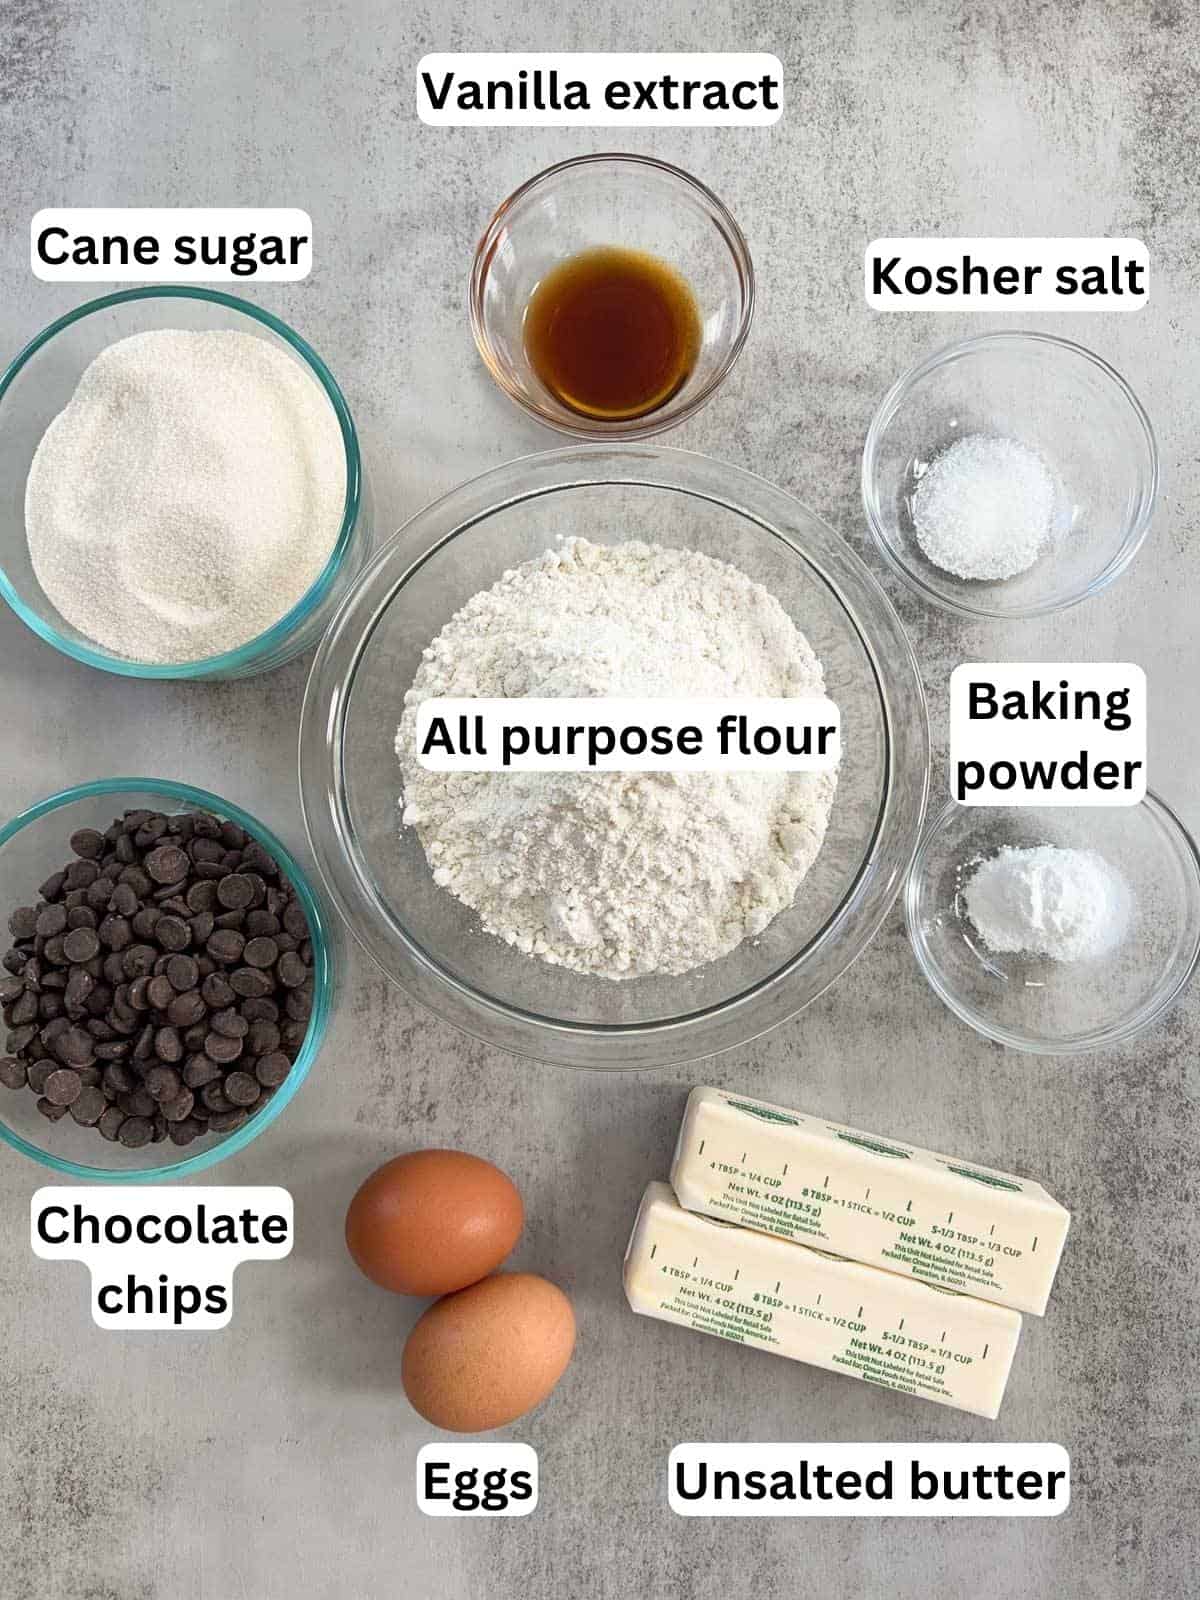 The ingredients to make chocolate chip sugar cookies.